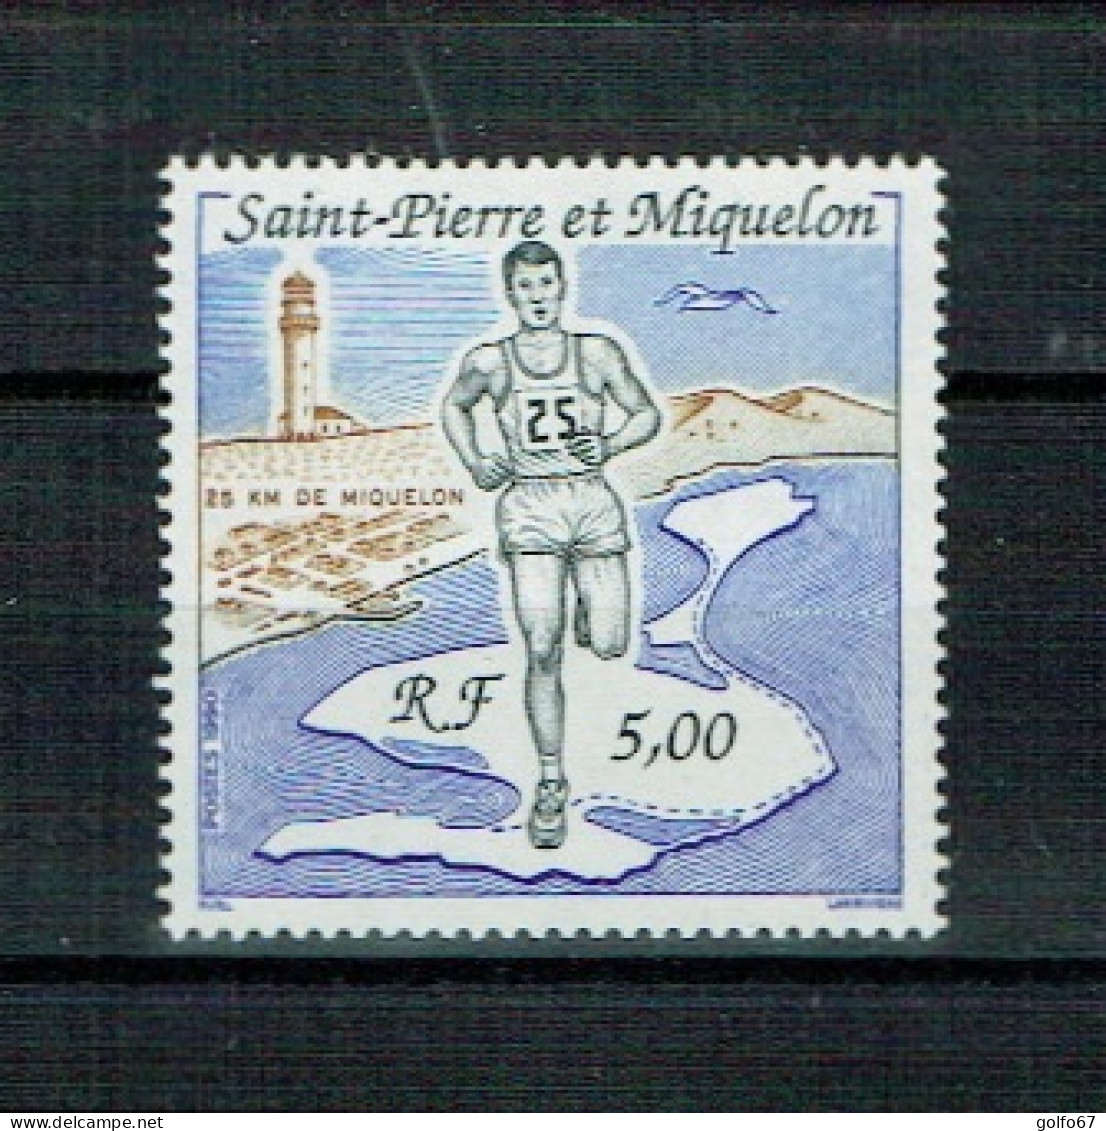 ST PIERRE & MIQUELON 1990 Y&T N° 522 NEUF** - Unused Stamps